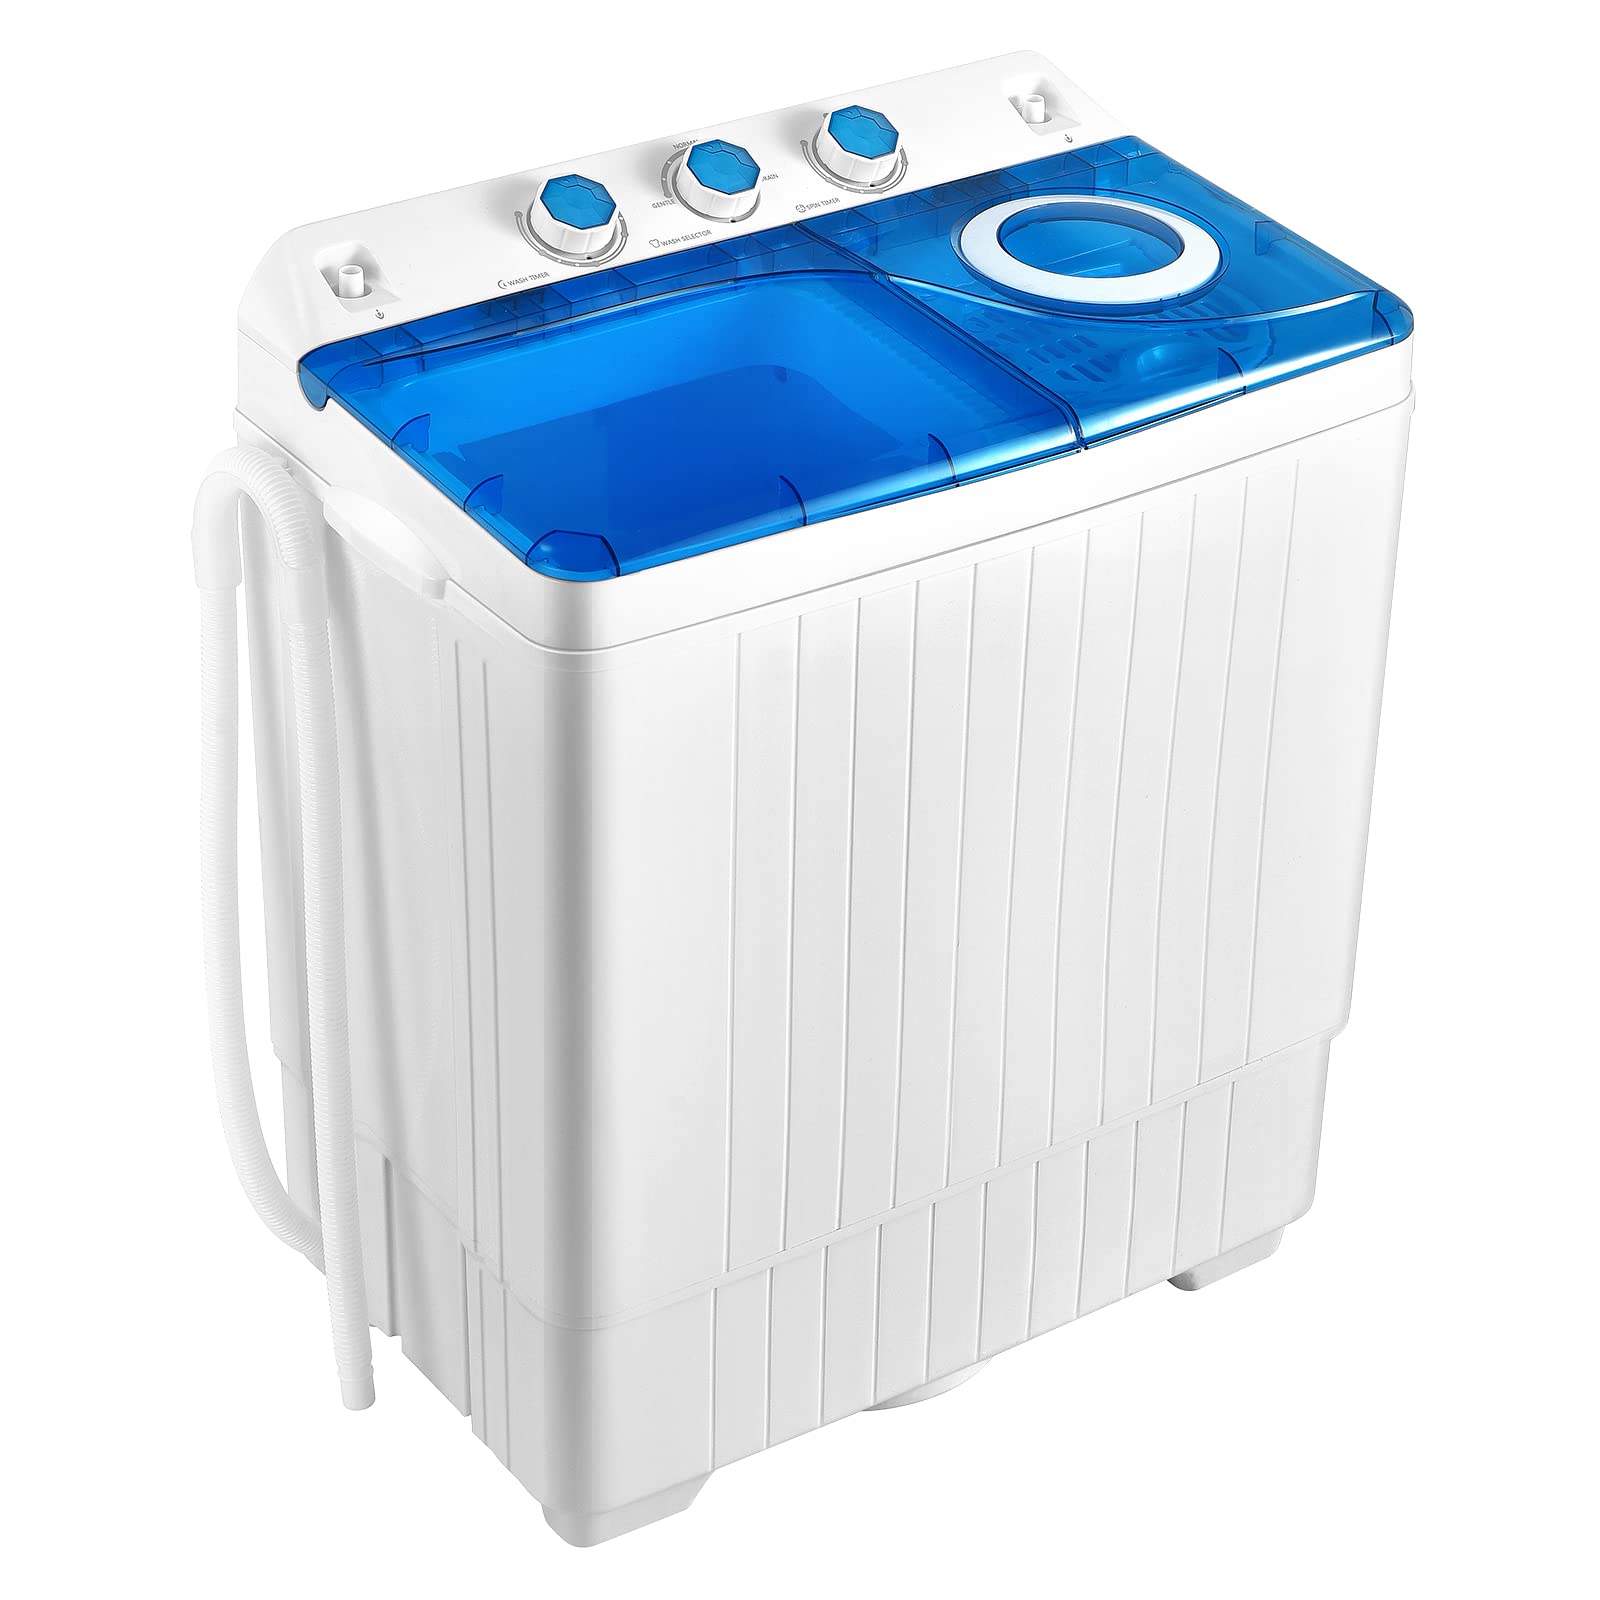 Portable Washing Machine w/Timer Control - Giantex